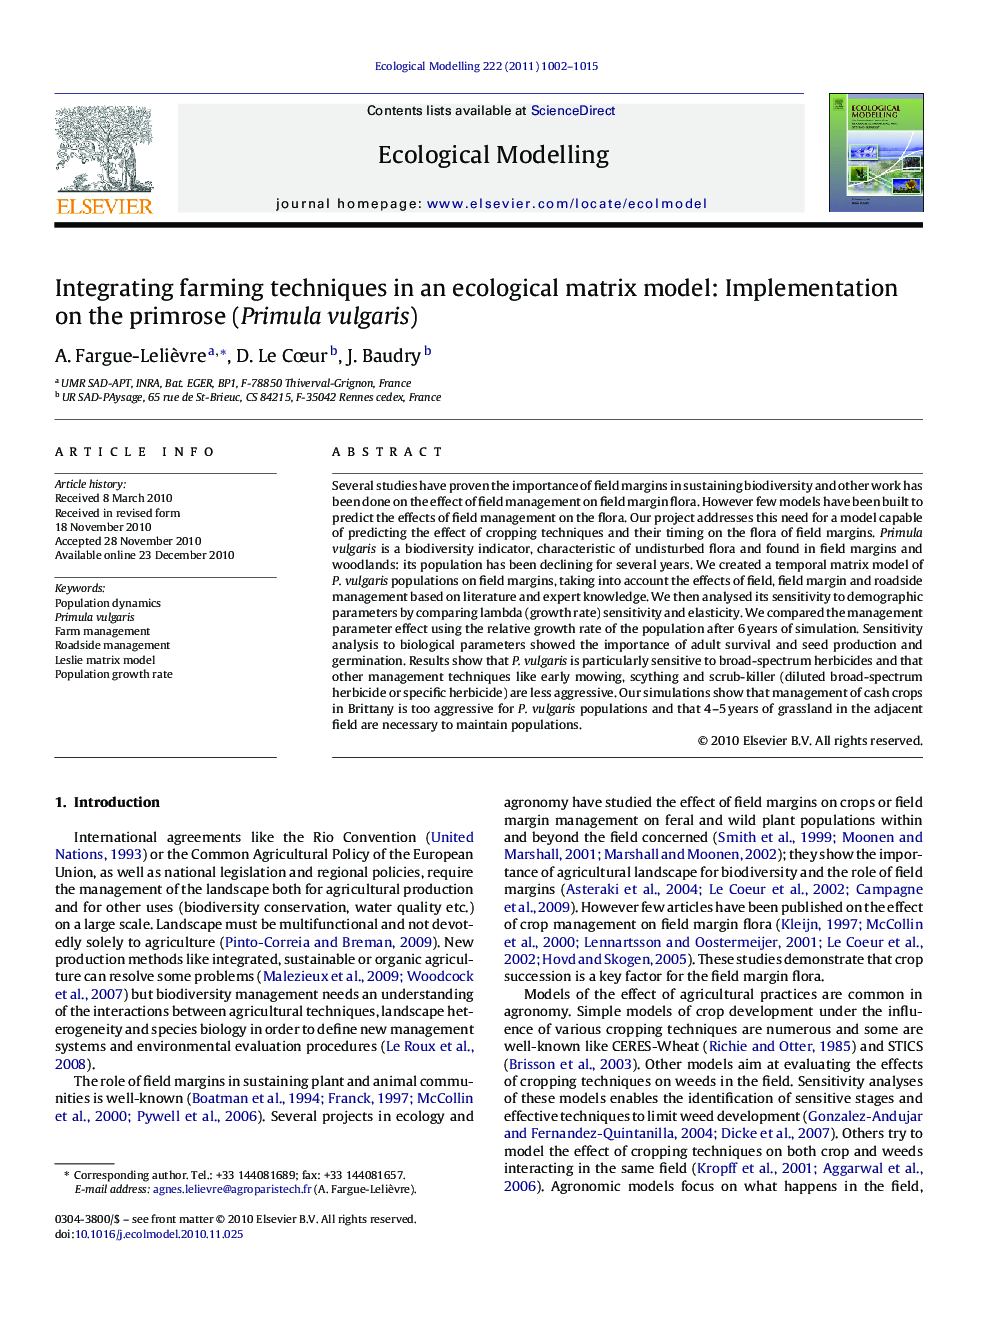 Integrating farming techniques in an ecological matrix model: Implementation on the primrose (Primula vulgaris)